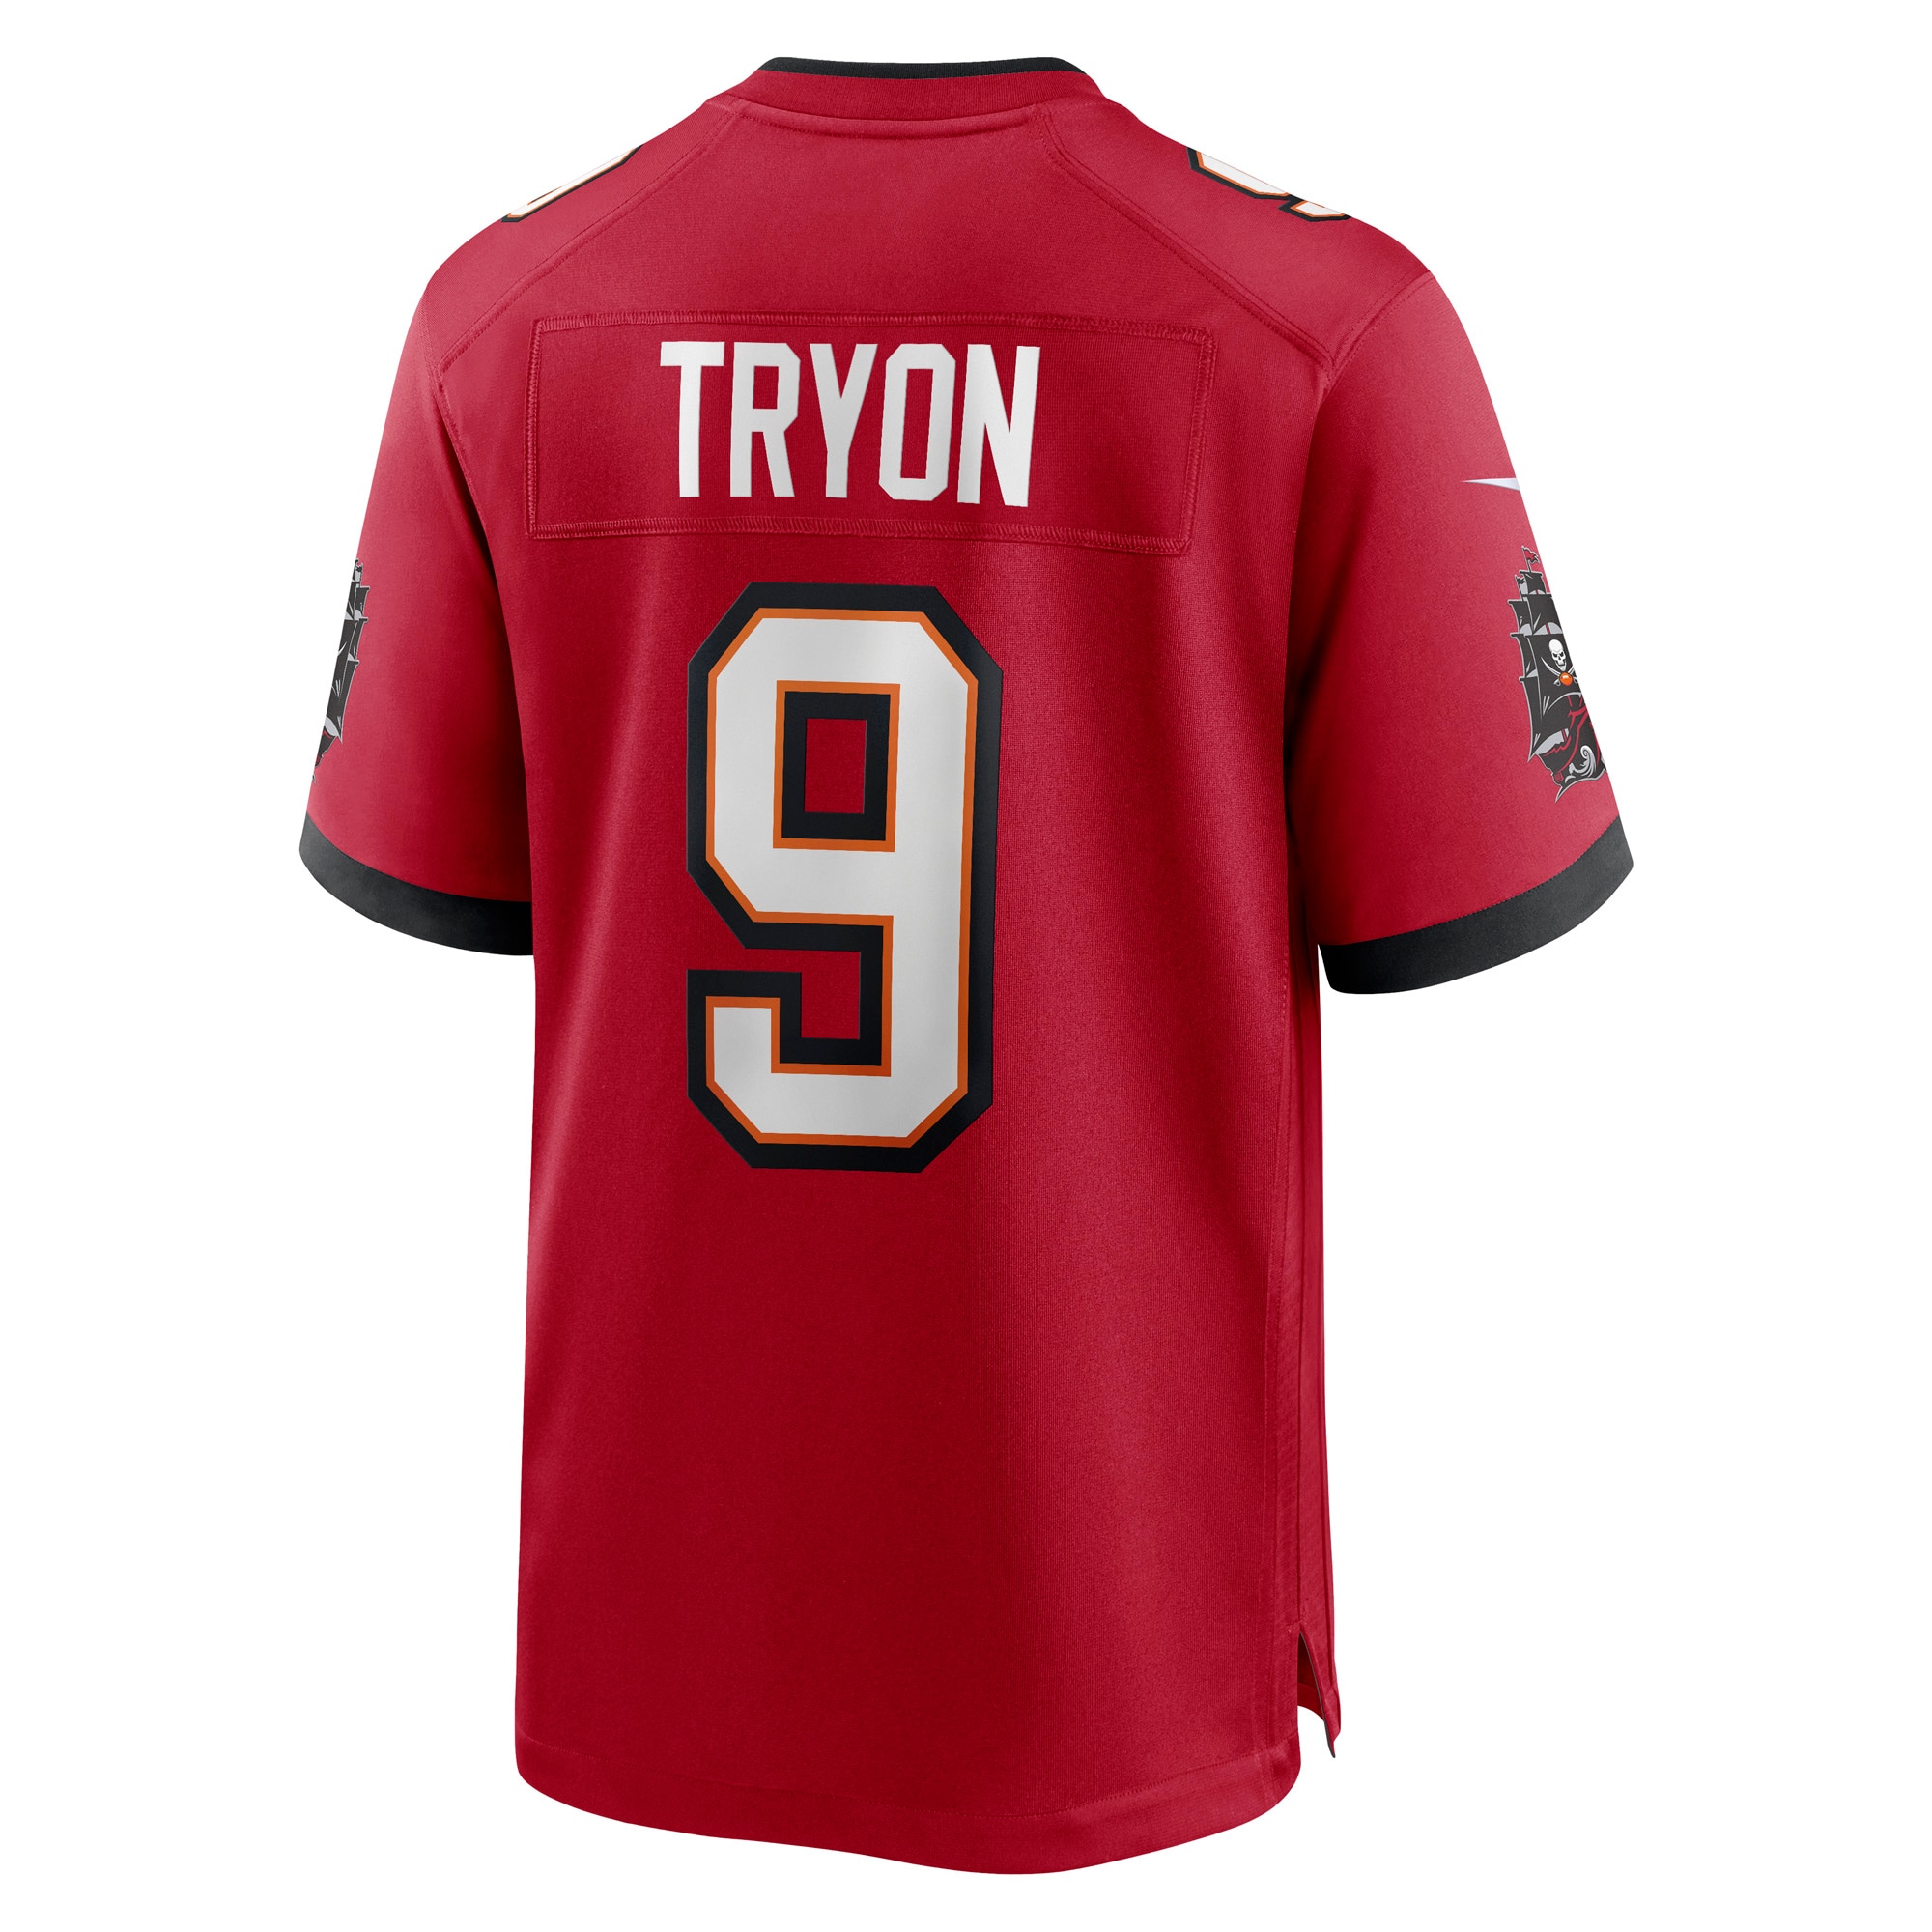 Men's Tampa Bay Buccaneers Jerseys Red Joe Tryon 2021 NFL Draft First Round Pick No. 32 Game Style